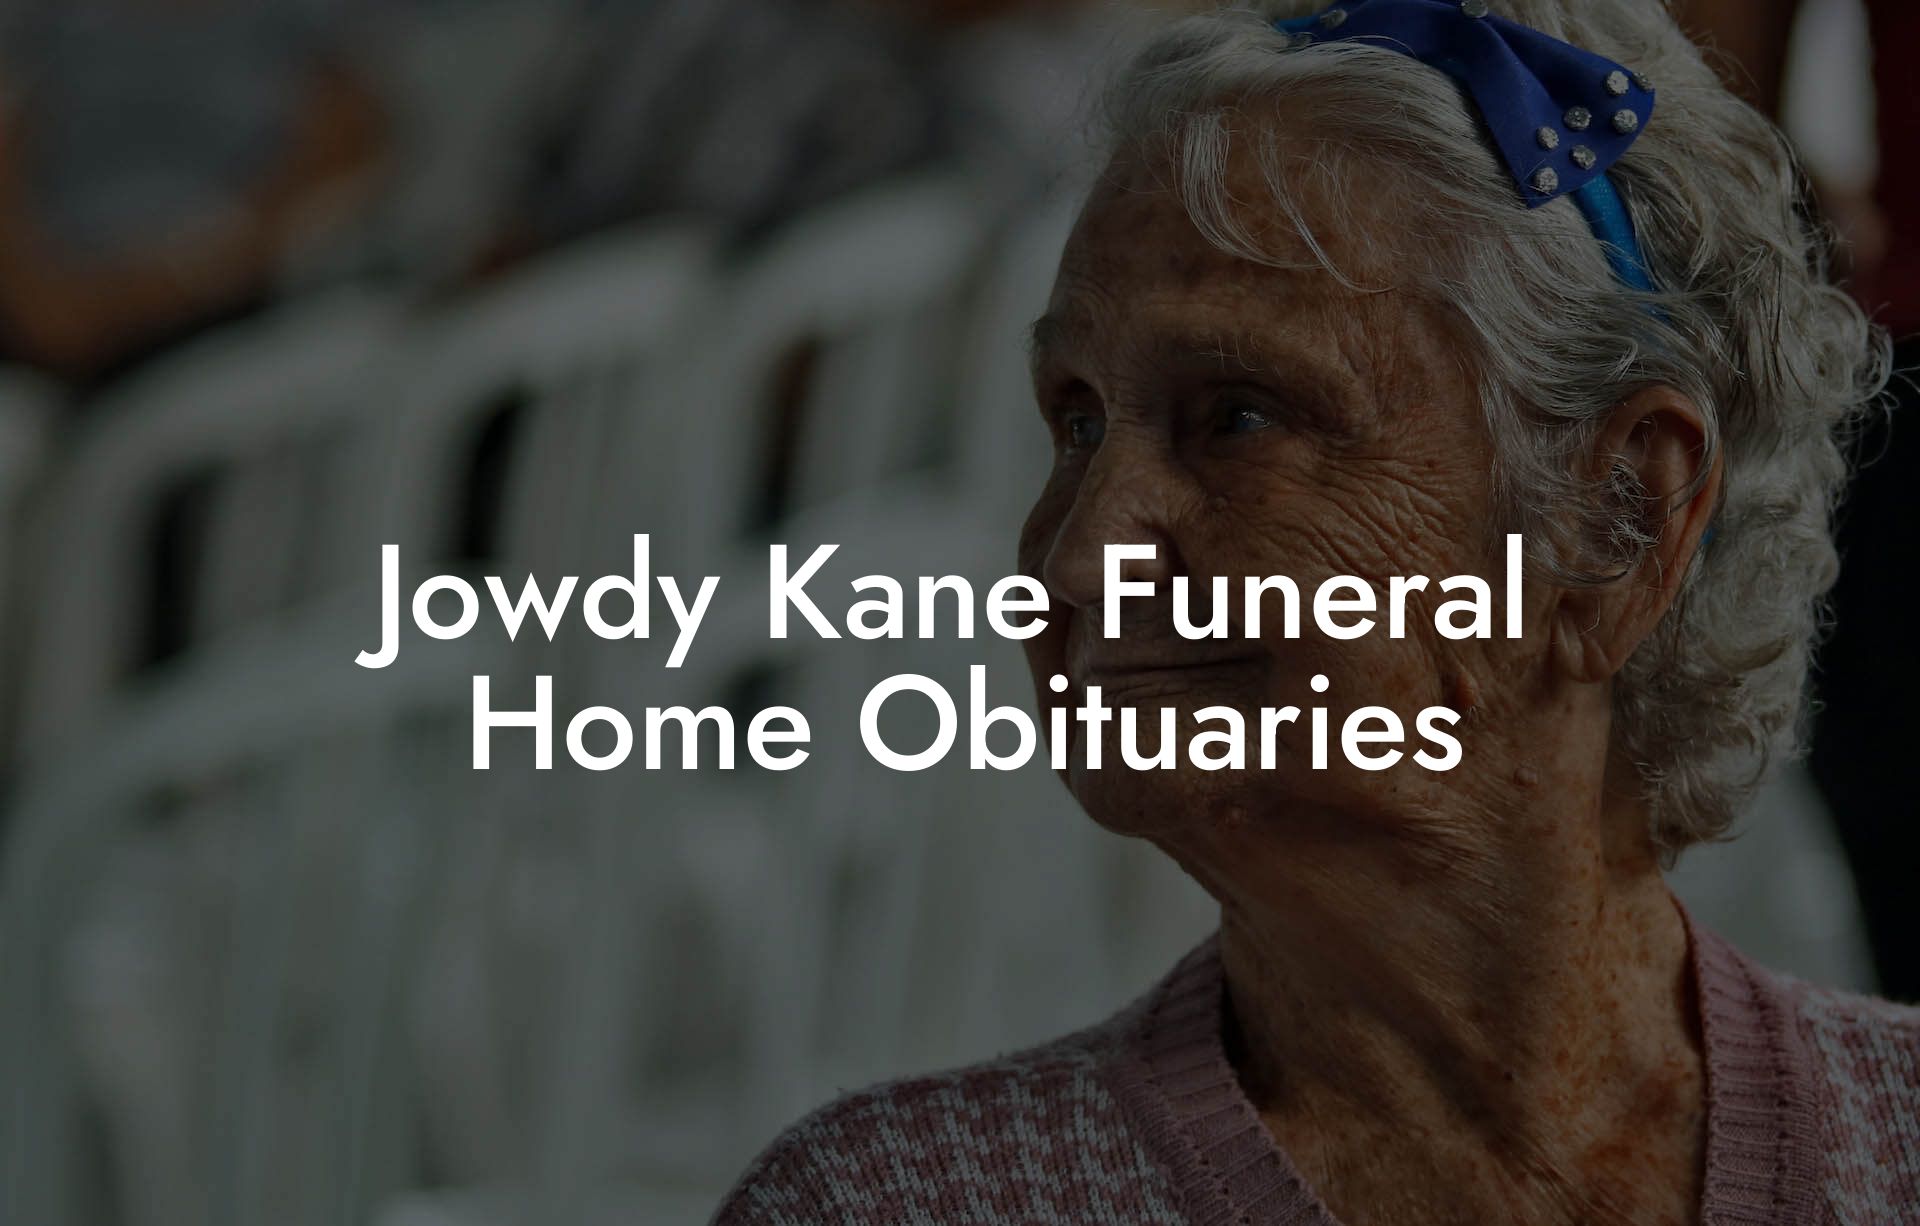 Jowdy Kane Funeral Home Obituaries